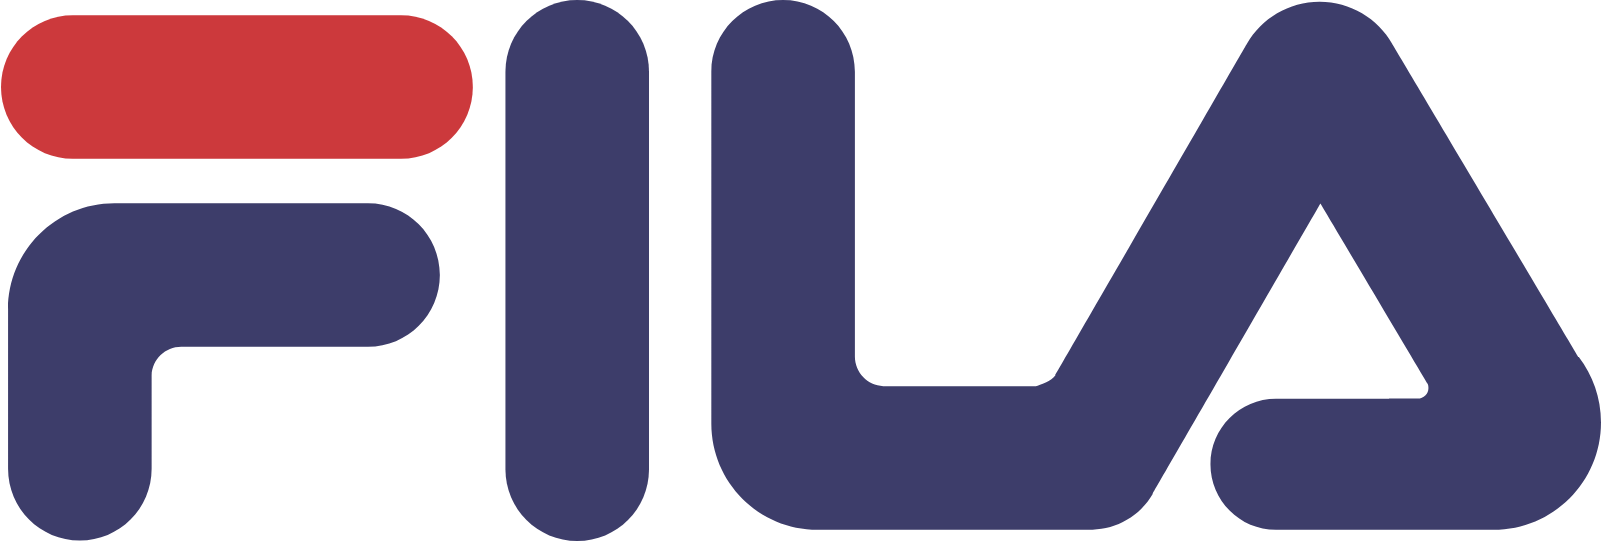 Fila logo (transparent PNG)